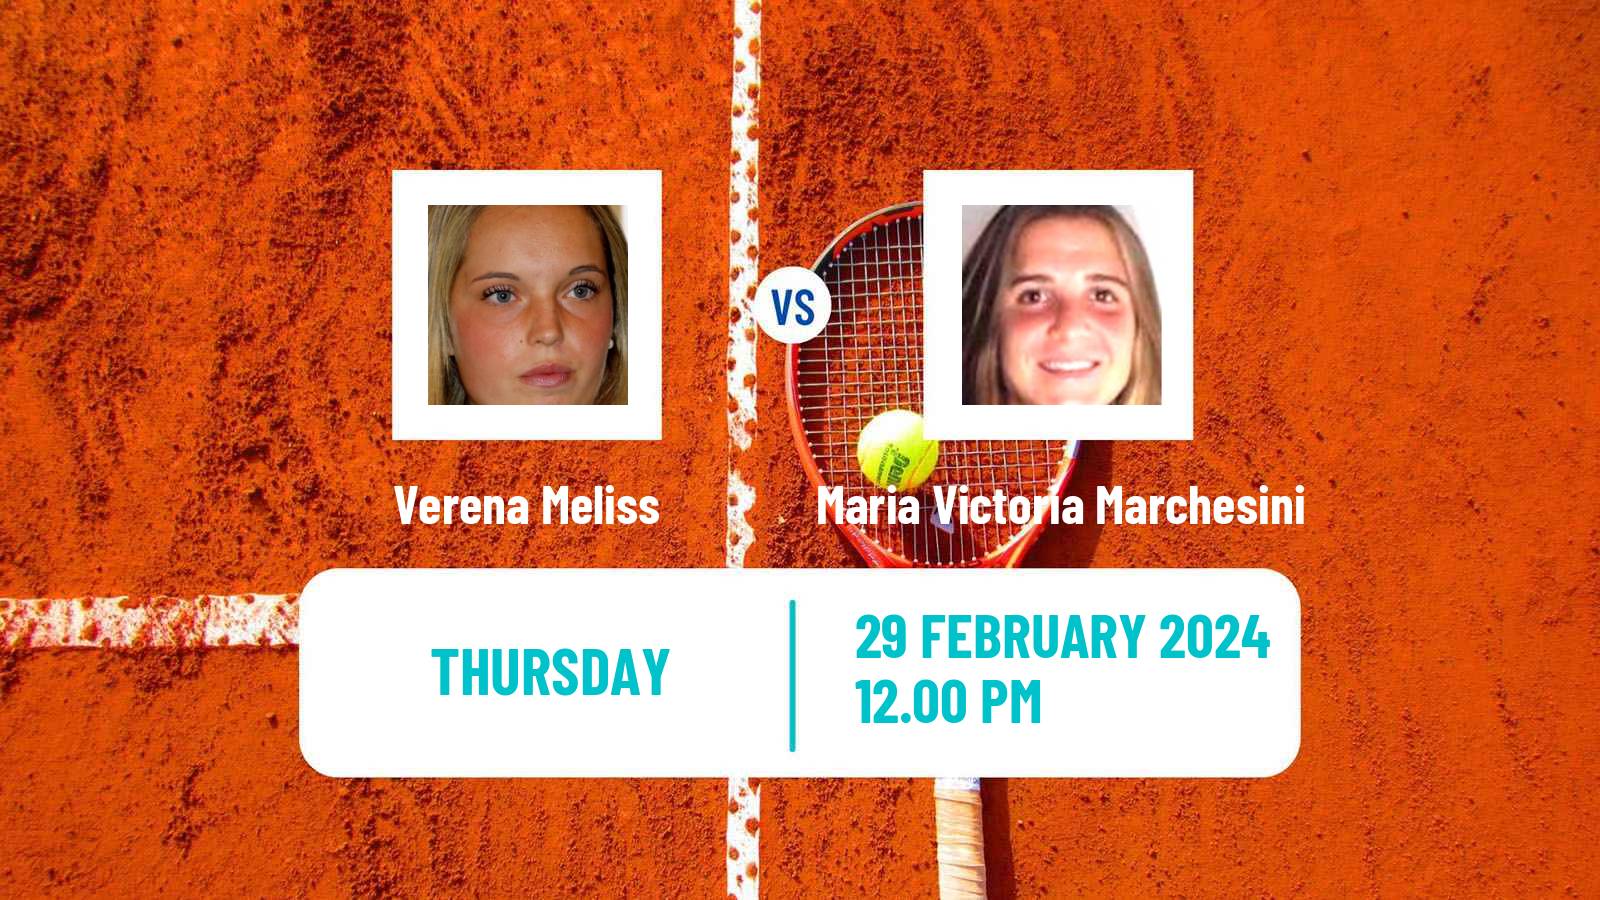 Tennis ITF W15 Tucuman Women Verena Meliss - Maria Victoria Marchesini